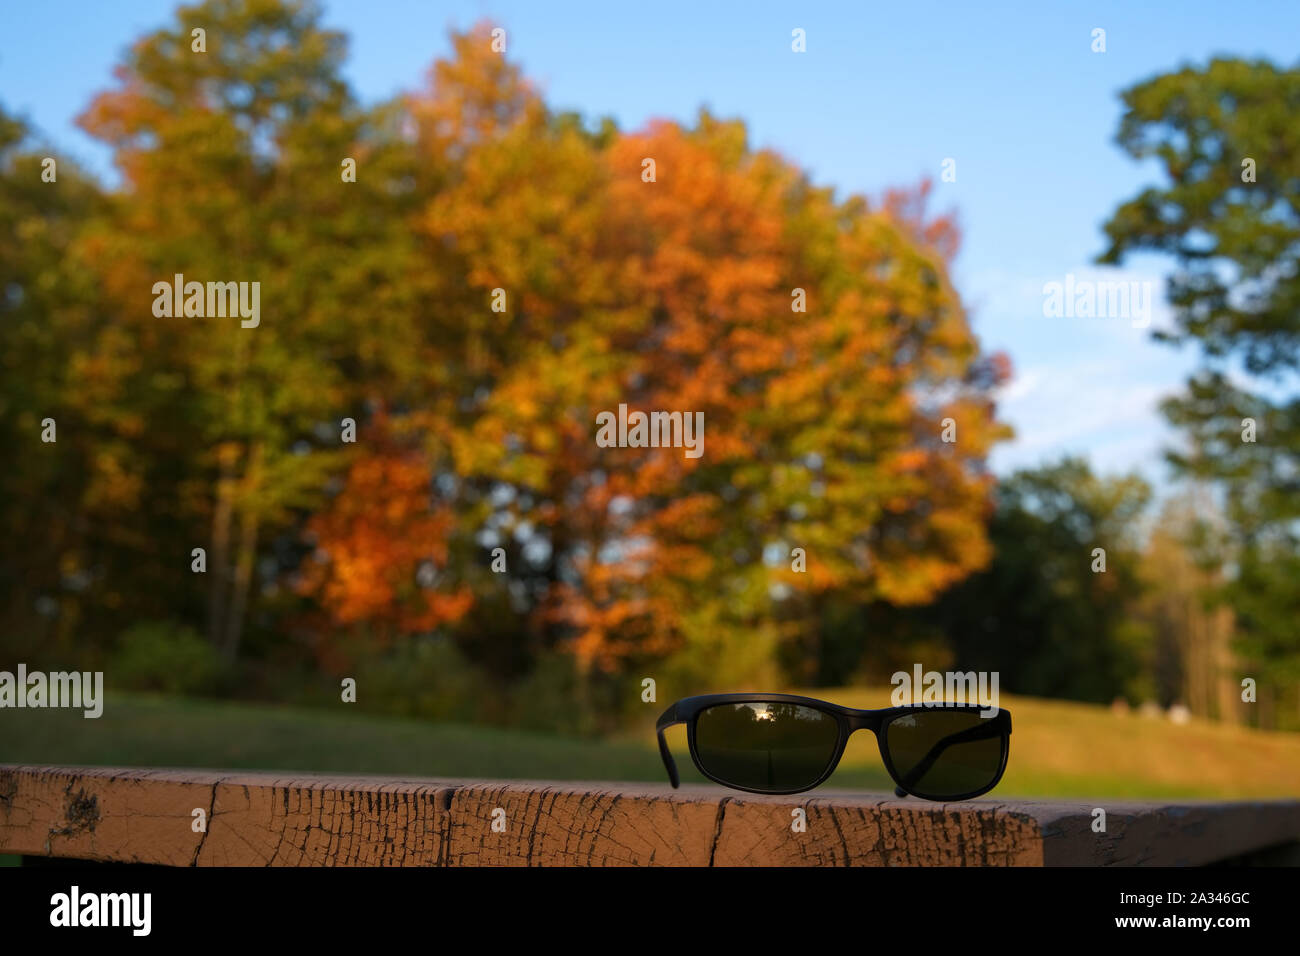 Pair of dark sunglasses on park picnic table among nice fall foliage. Stock Photo